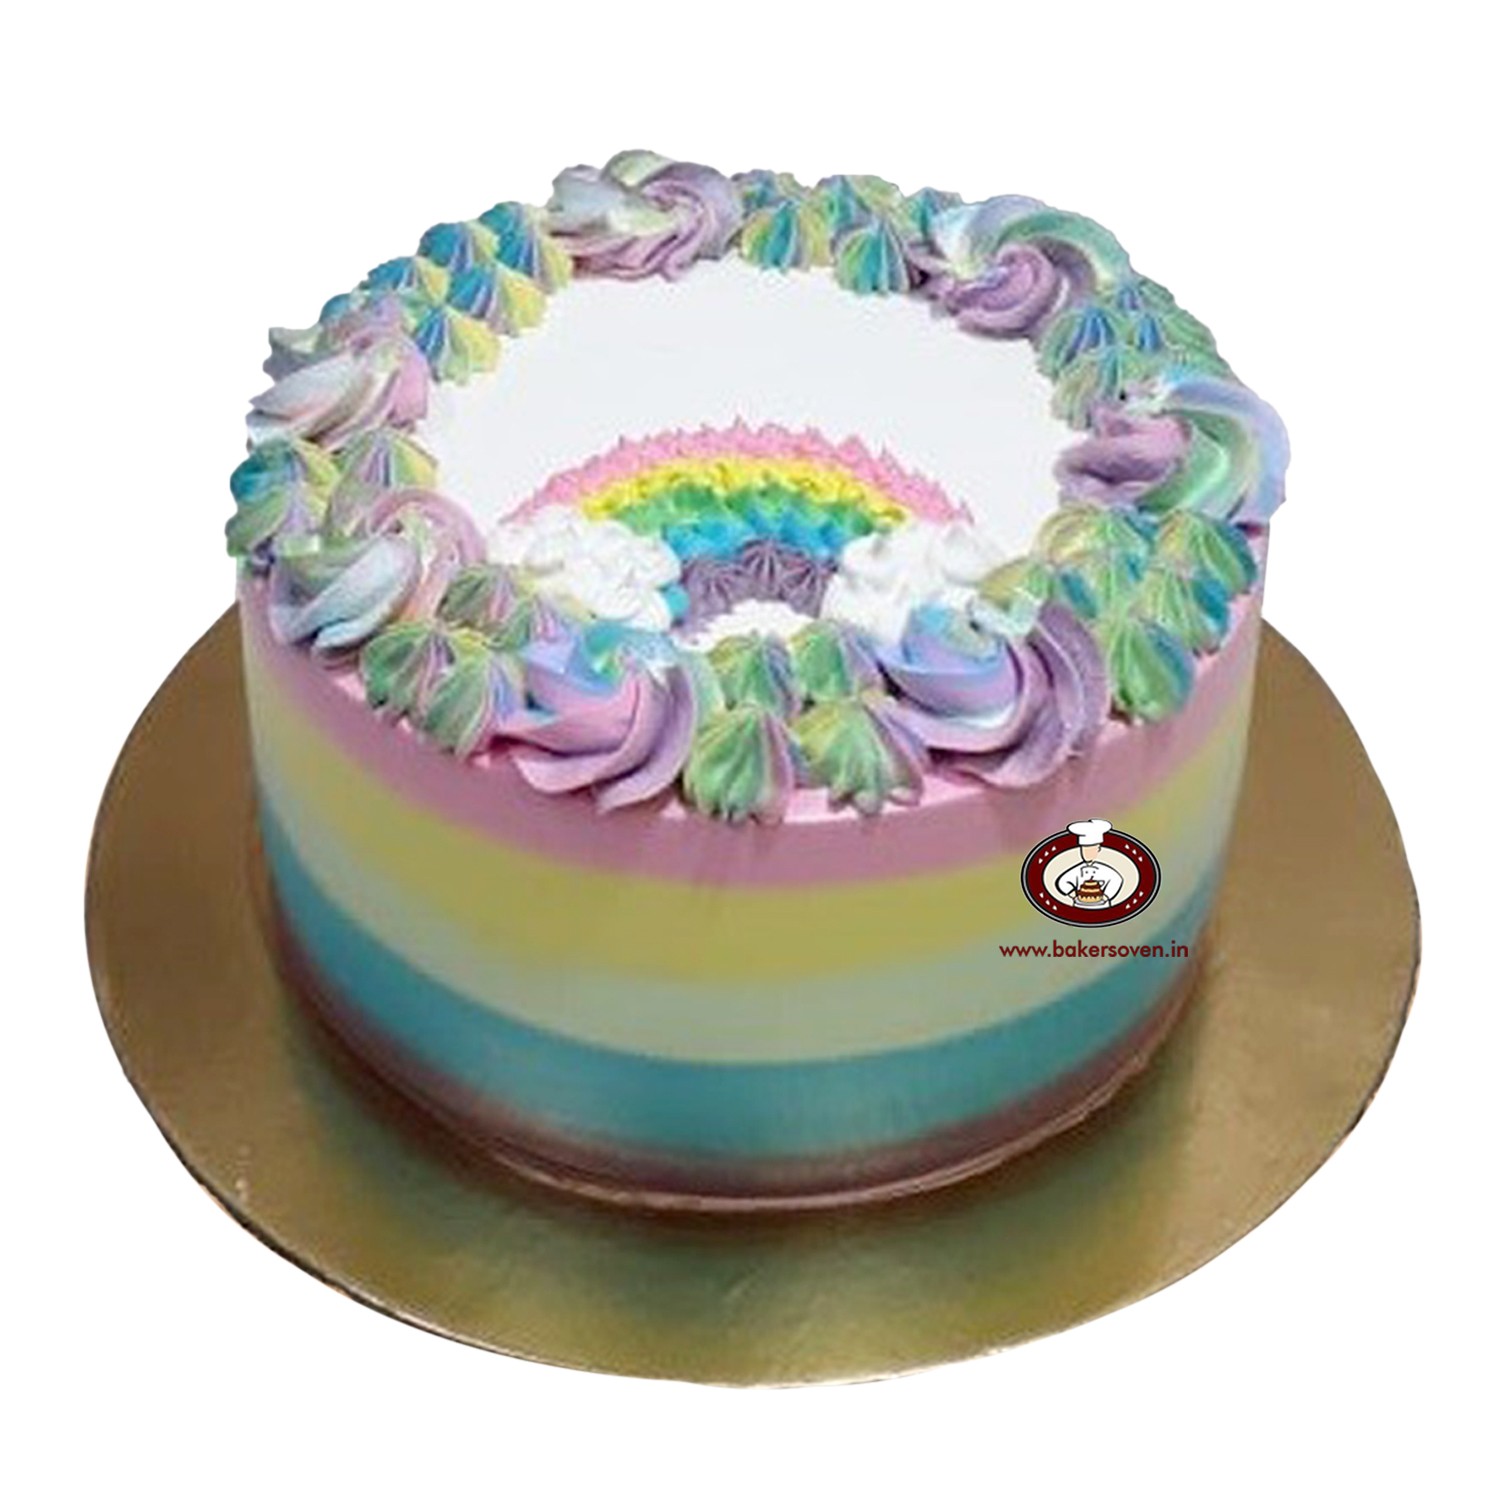 Zuka Chocolates: Learn to make or order Rainbow Cake Pastry